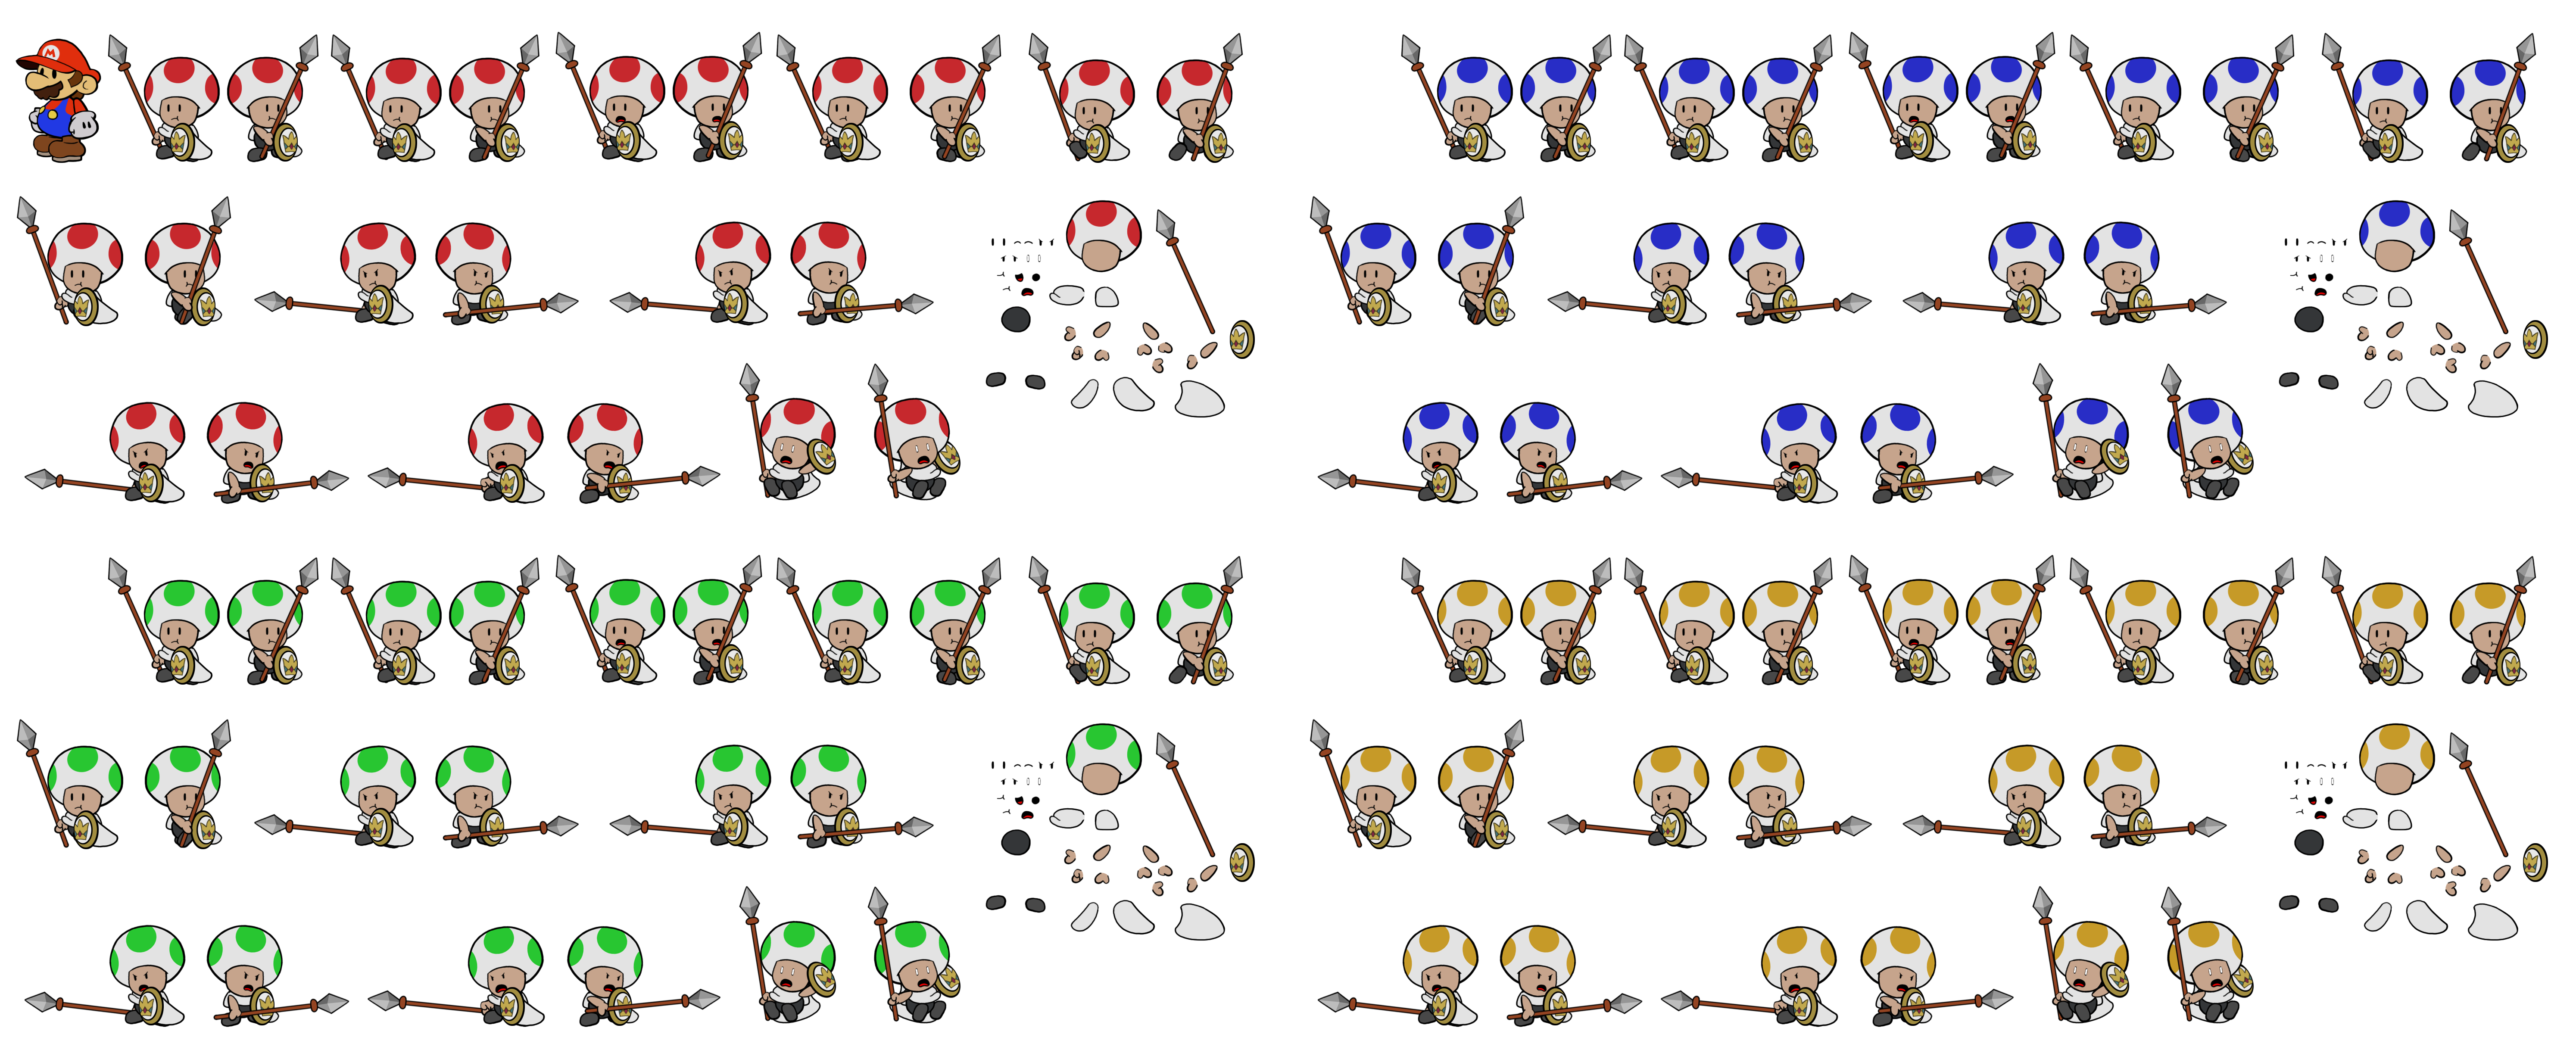 Paper Mario Customs - Guard Toads (Paper Mario-Style)